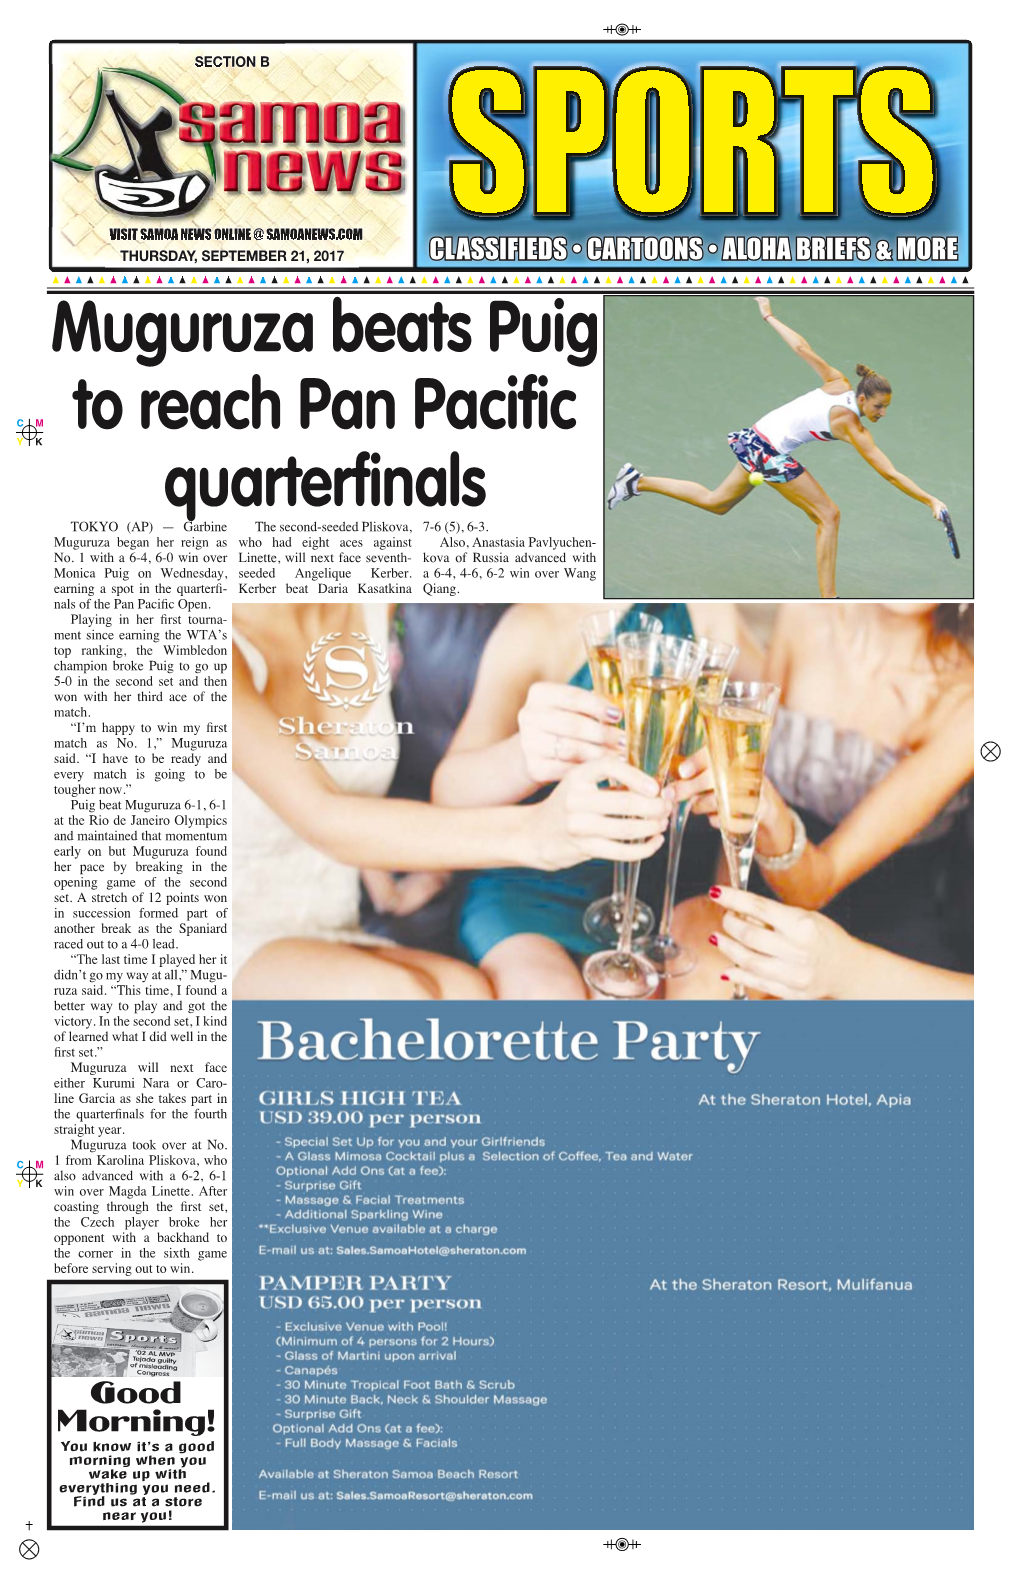 Muguruza Beats Puig to Reach Pan Pacific Quarterfinals